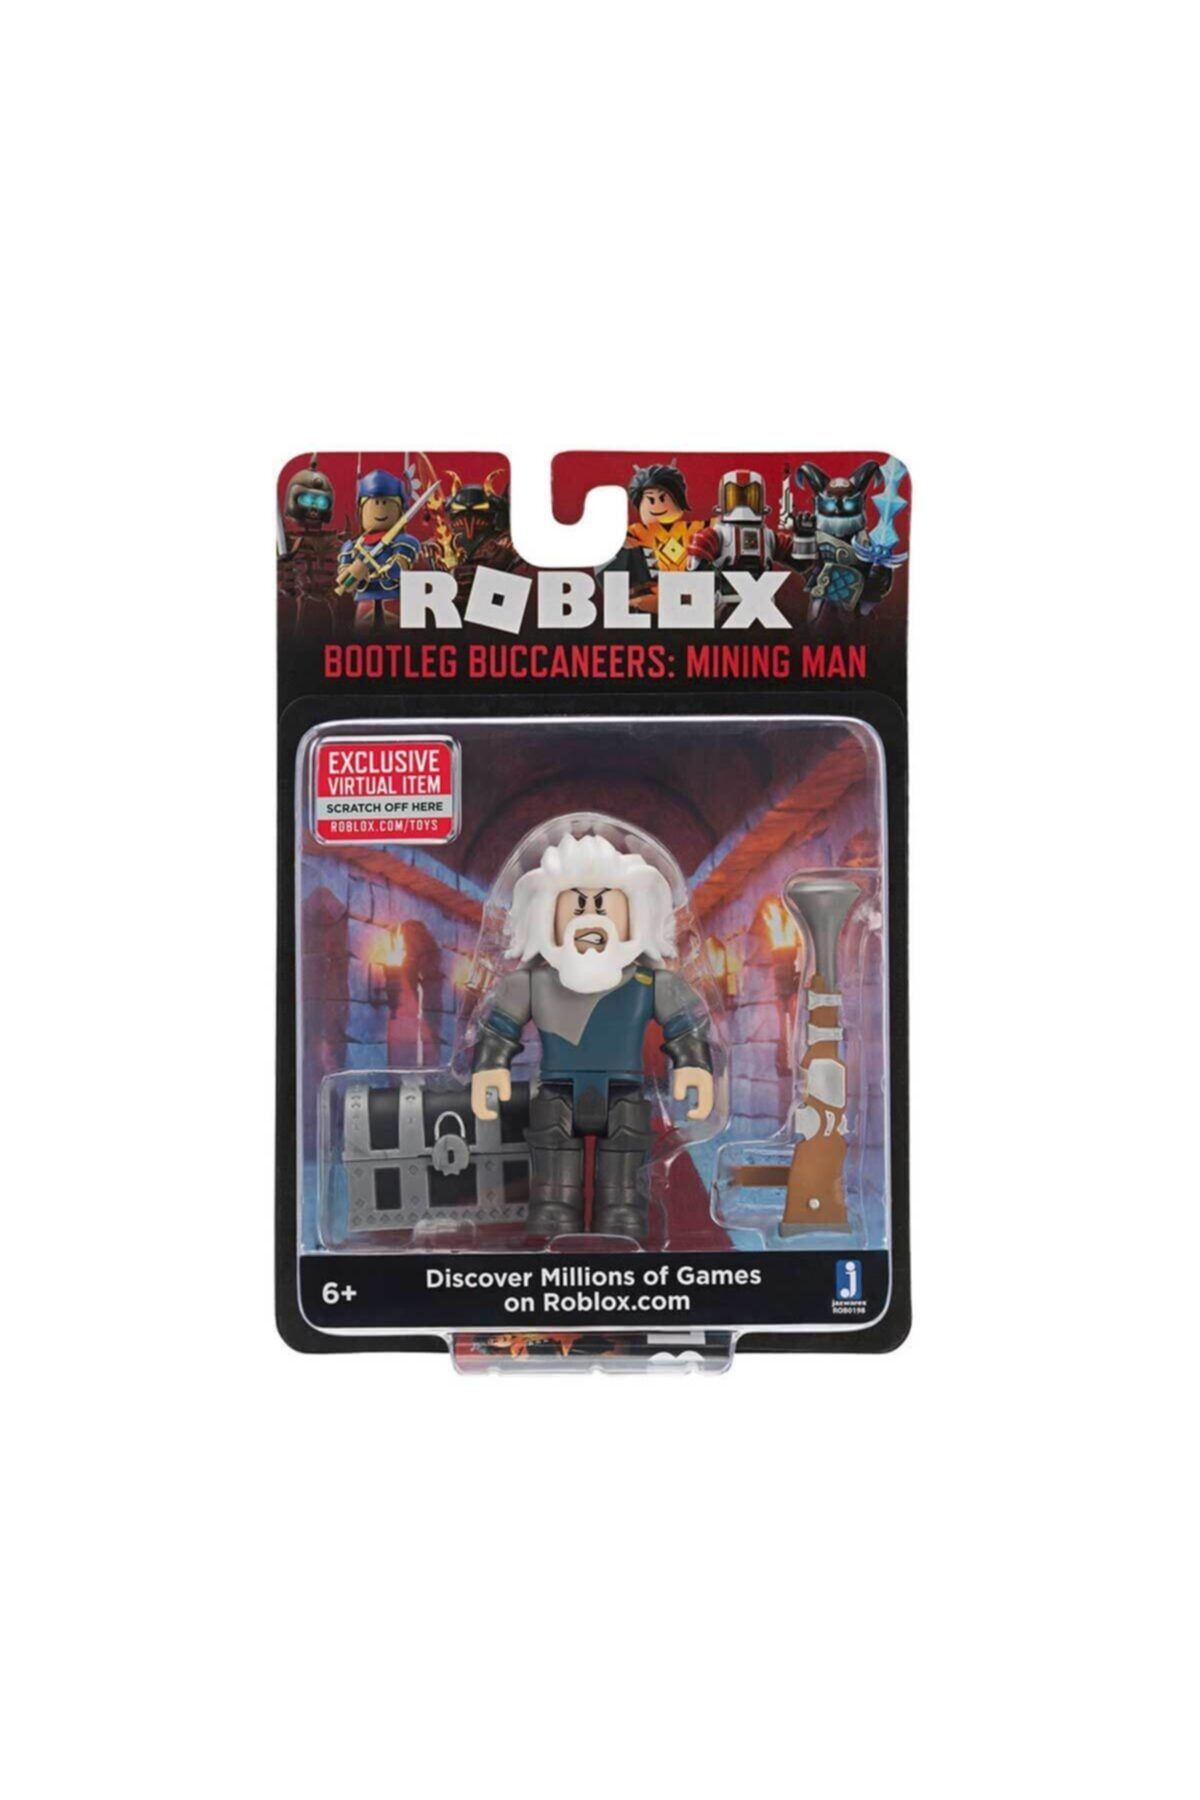 Roblox Bootleg Buccaneers: Mining Man